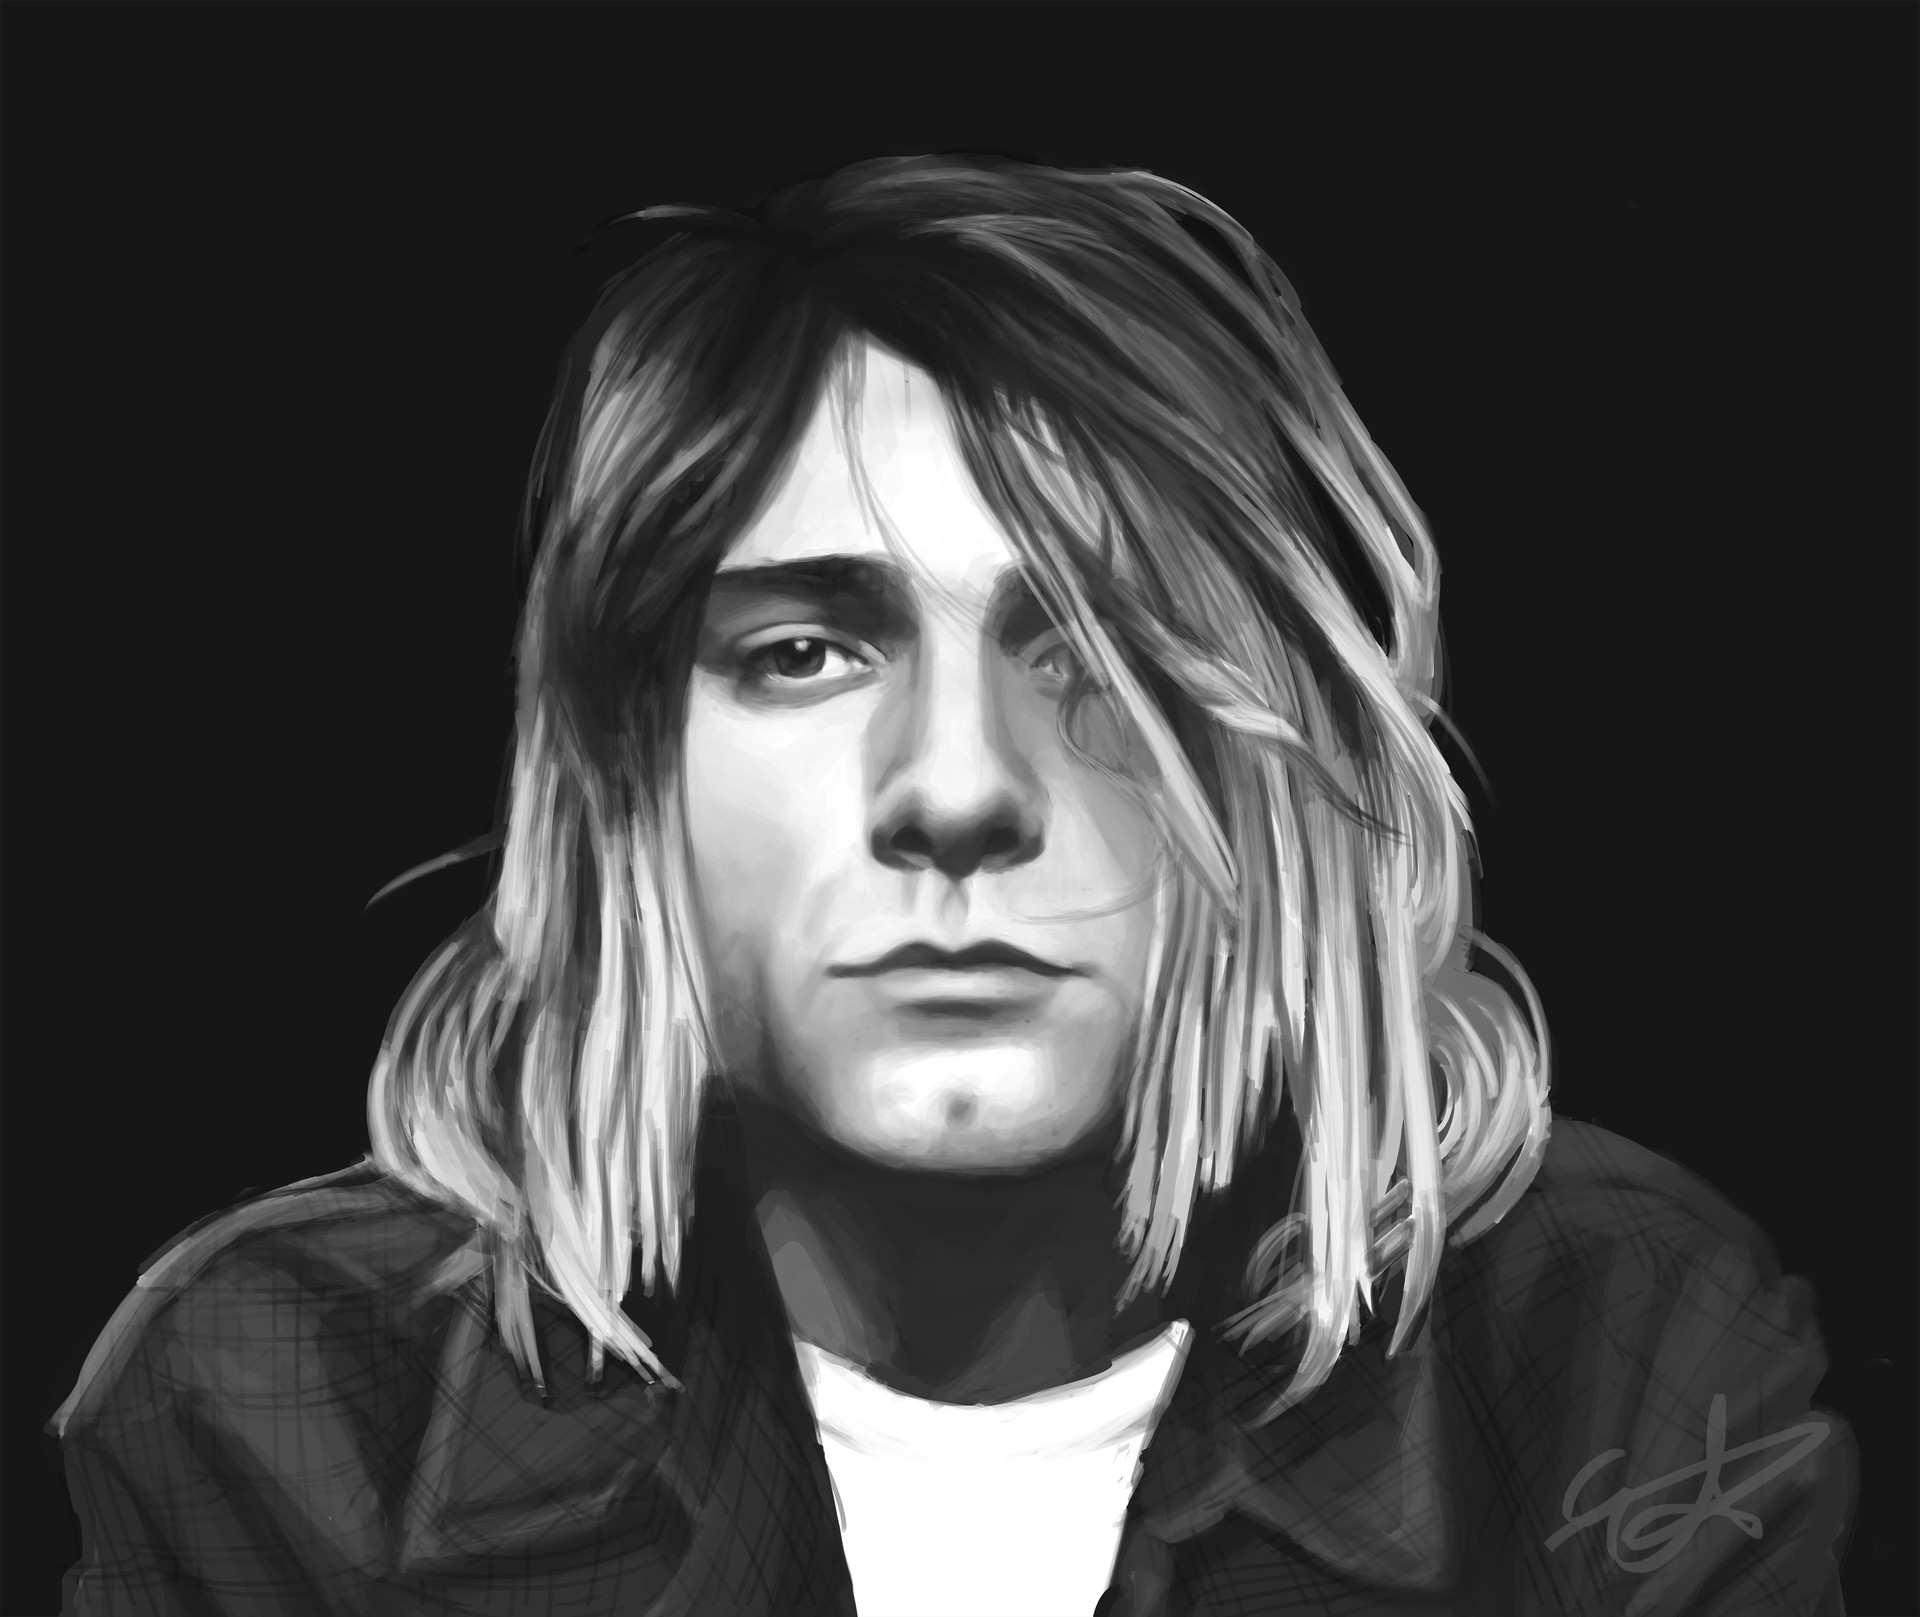 ArtStation - Kurt Cobain portrait